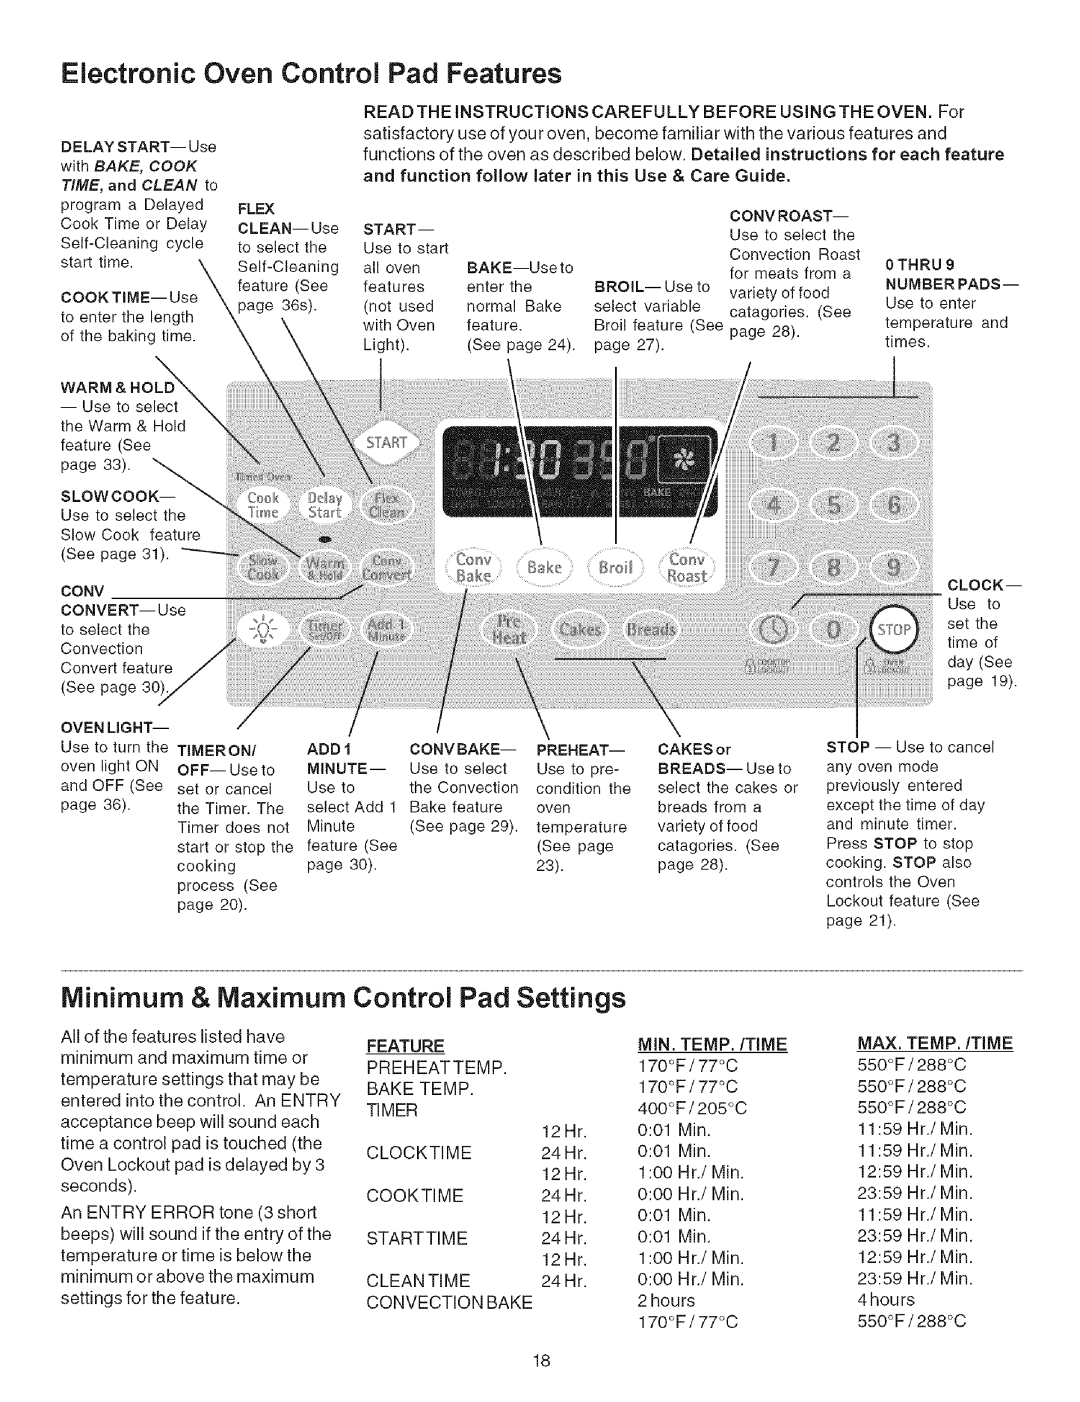 Kenmore 790.9659 manual Electronic Oven Control Pad Features, Minimum & Maximum, Control Pad Settings 